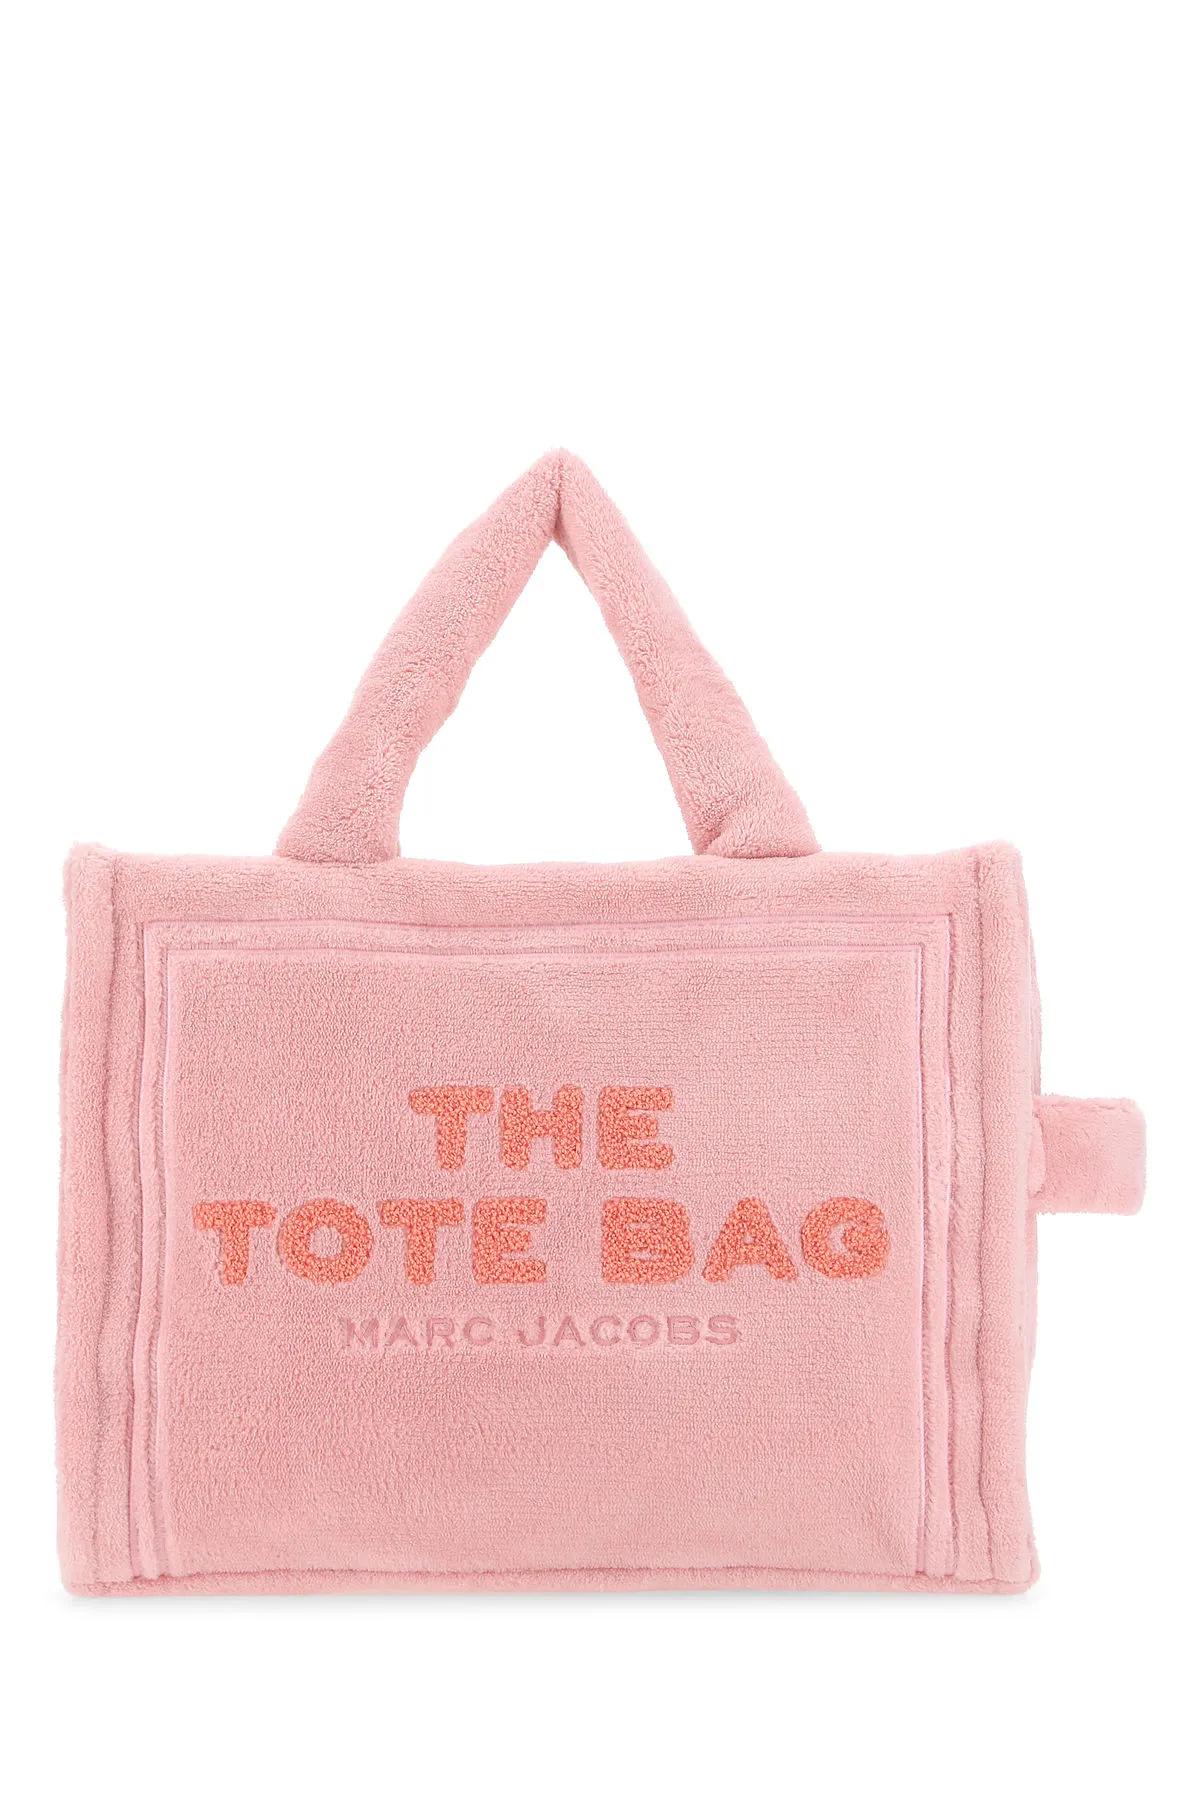 marc jacobs the terry medium tote pink handbag